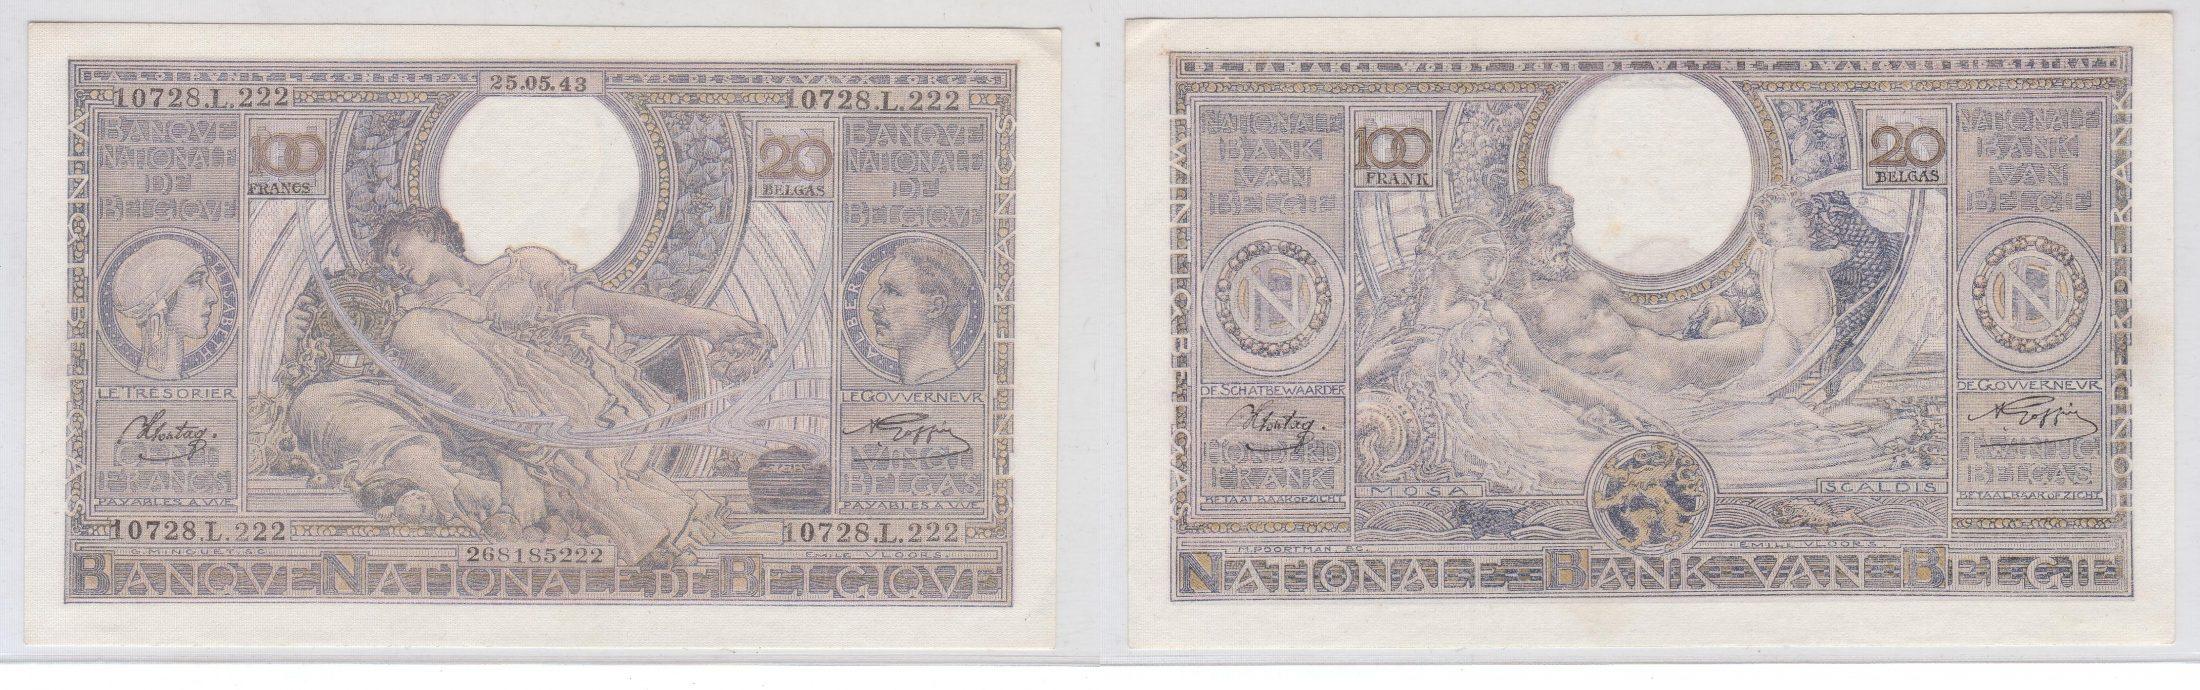 Foto Belgique 100 Francs /20 Belgas 25 5 1943